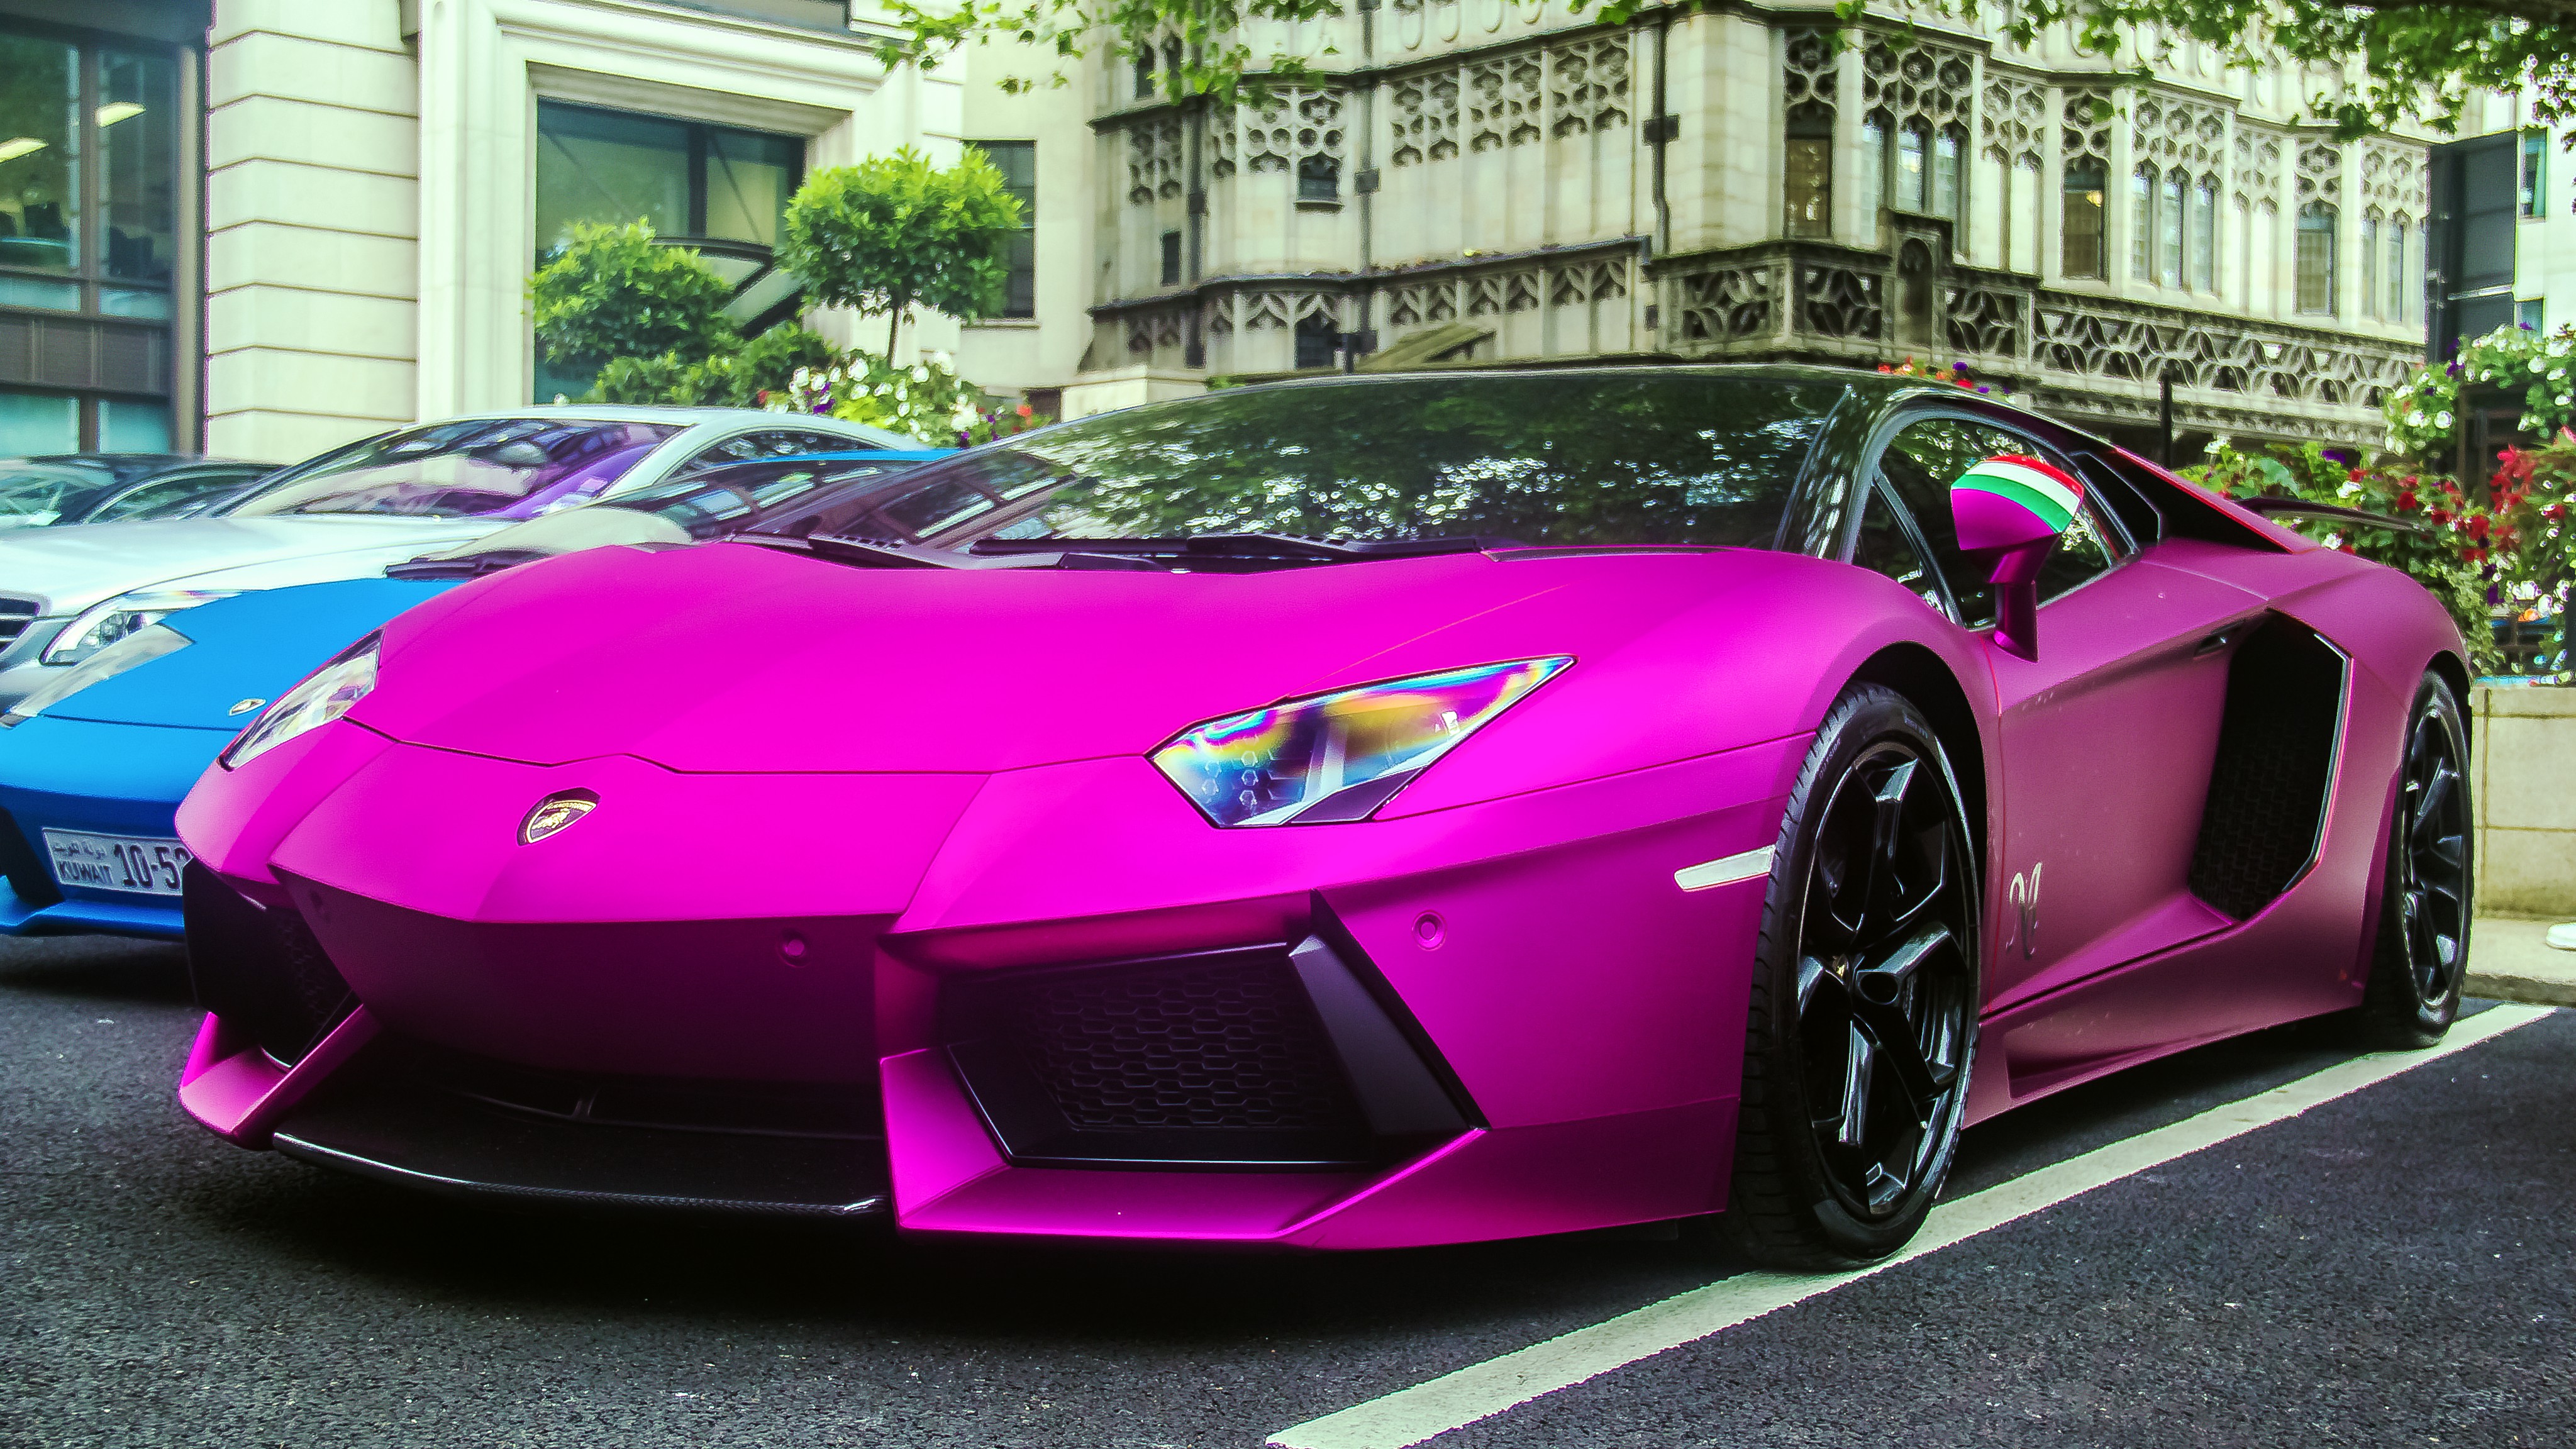 Hot Pink Lamborghini Cars Aventador Pictures